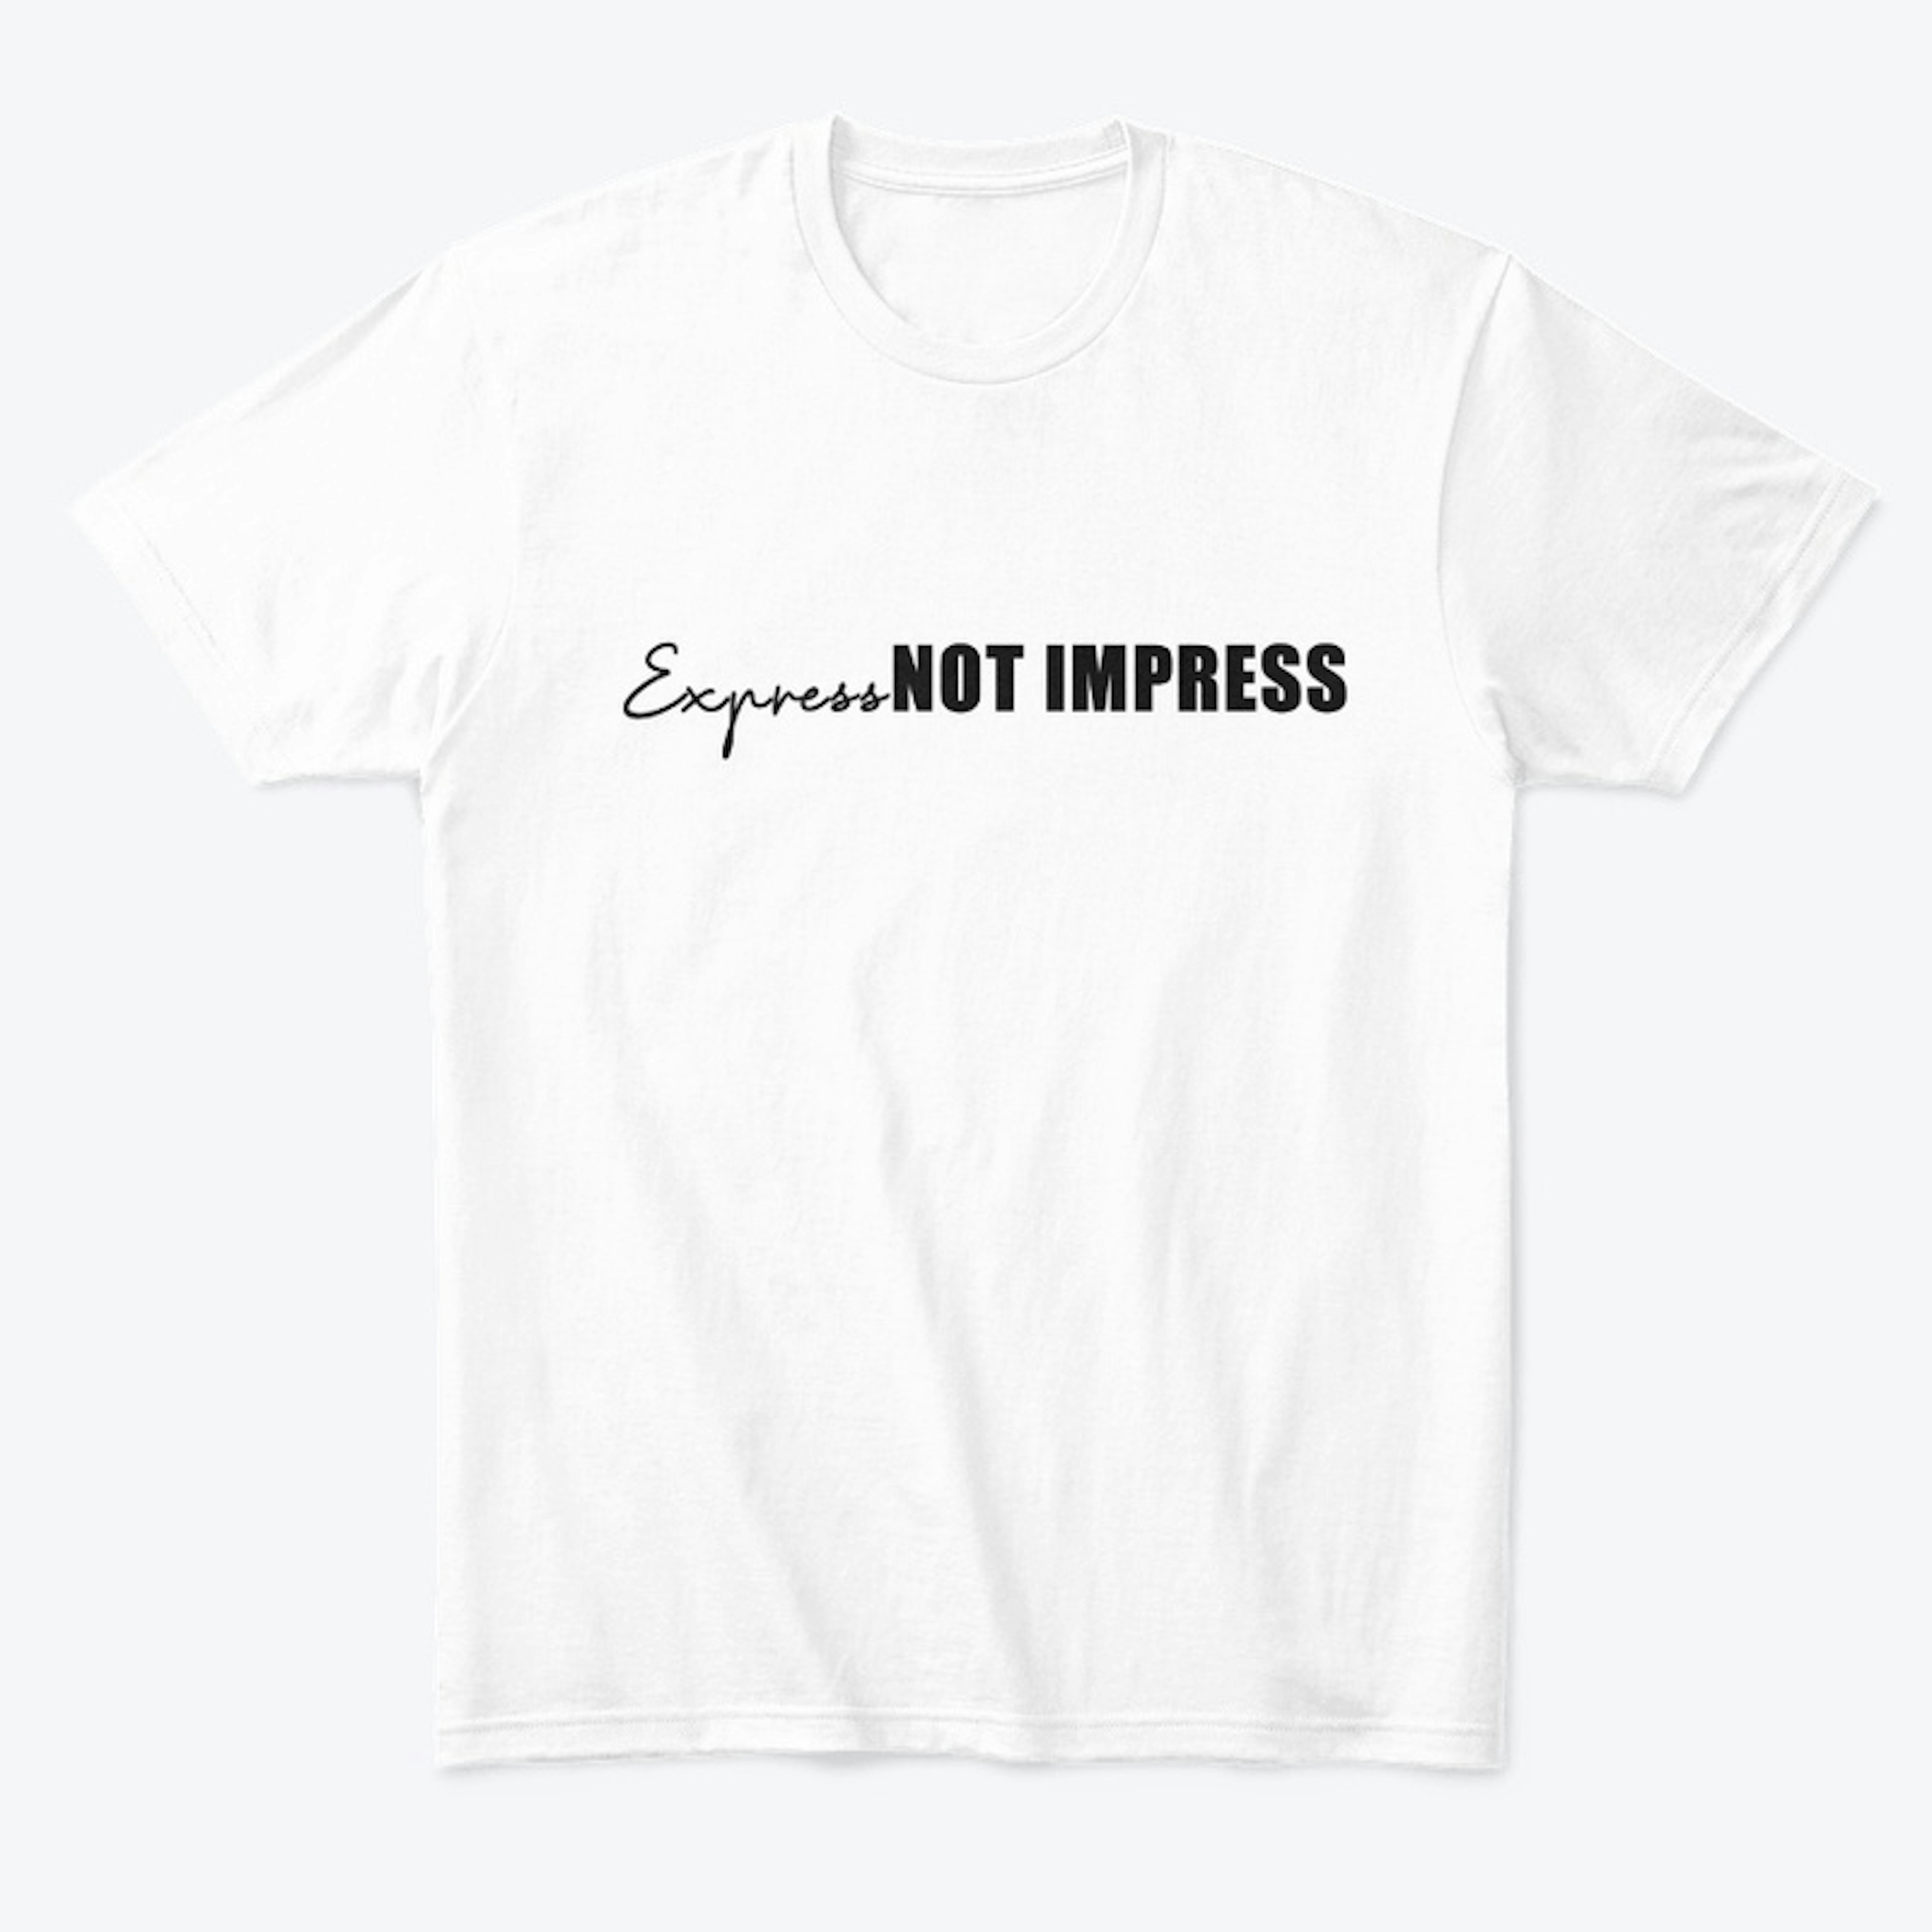 Express NOT IMPRESS